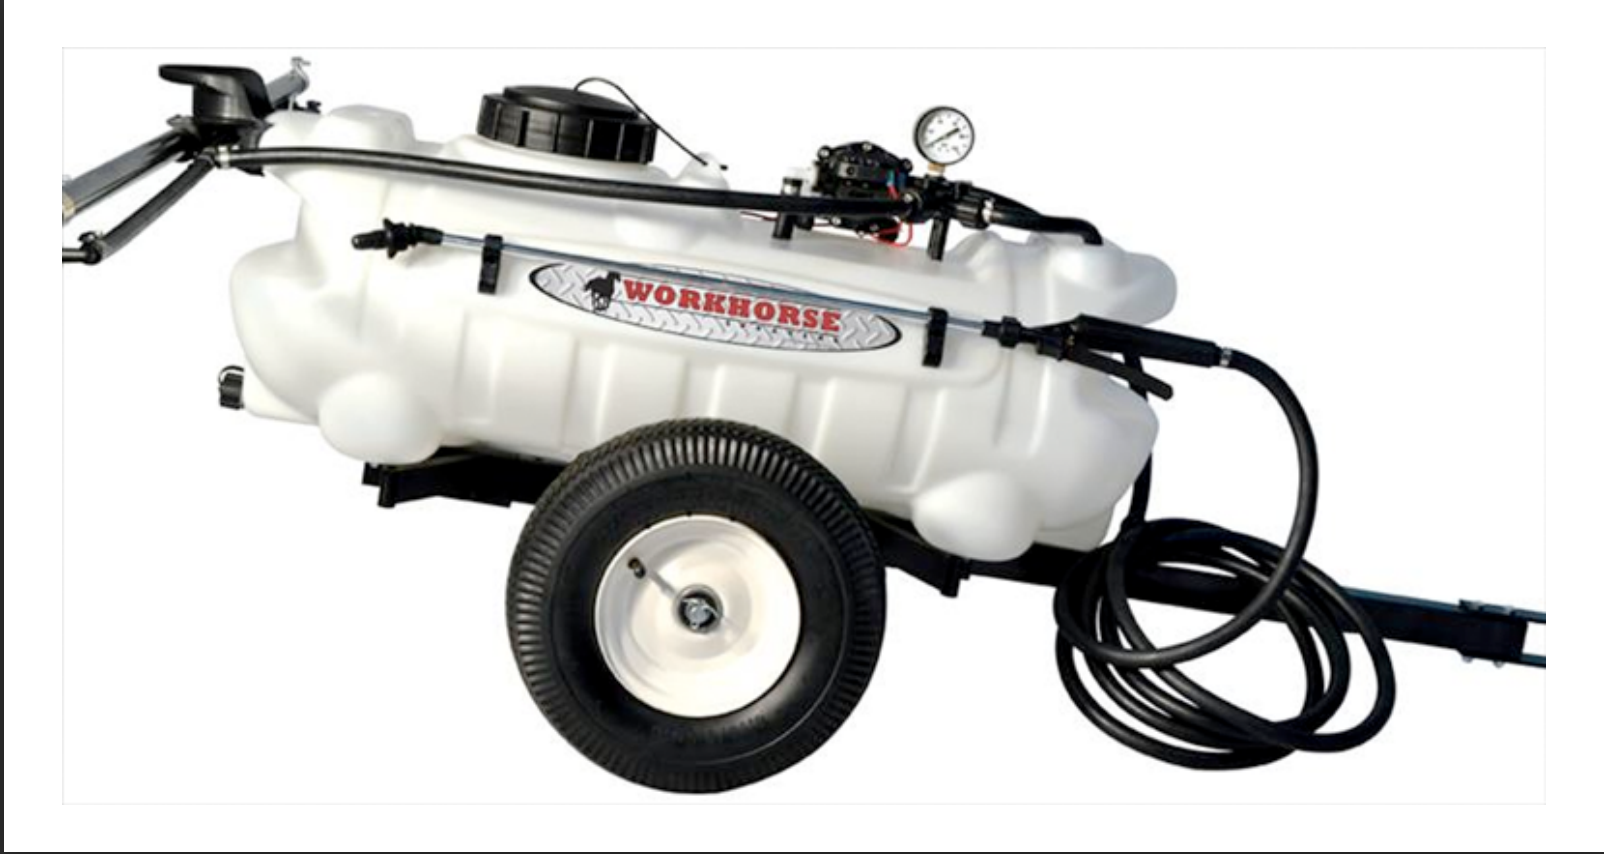 Workhorse 25 gallon trailer sprayer Image